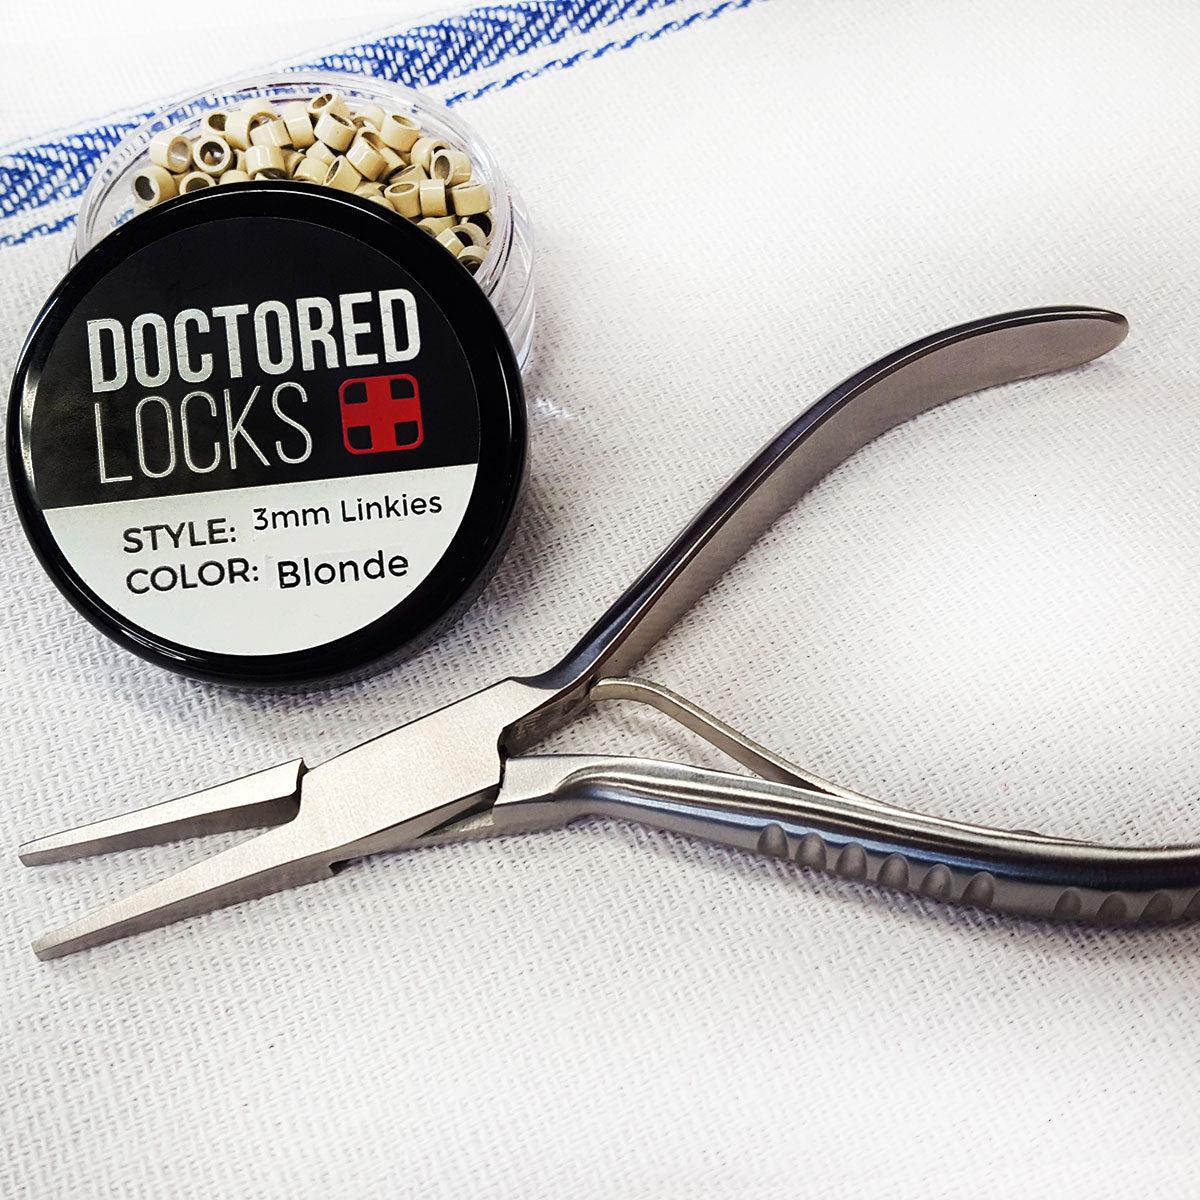 Stainless steel flat glide closer tool next to Doctored Locks blonde linkies microrings